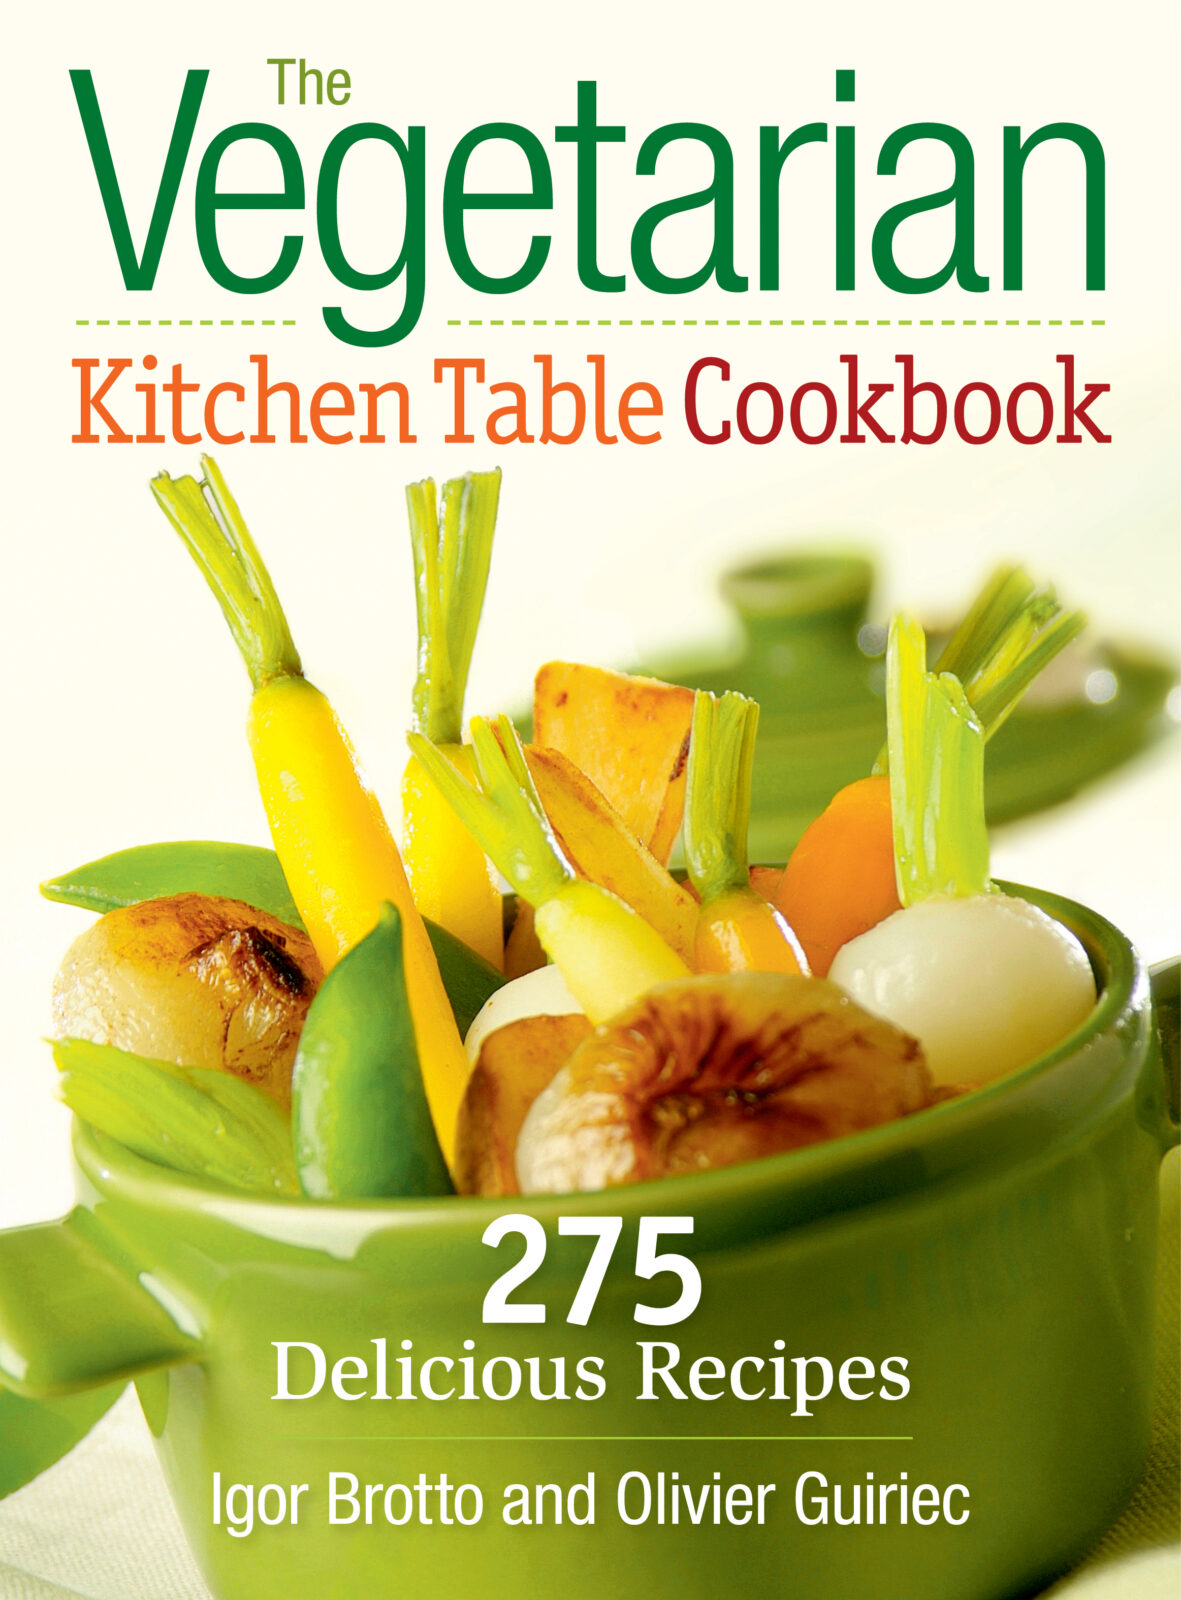 The Vegetarian Kitchen Table Cookbook